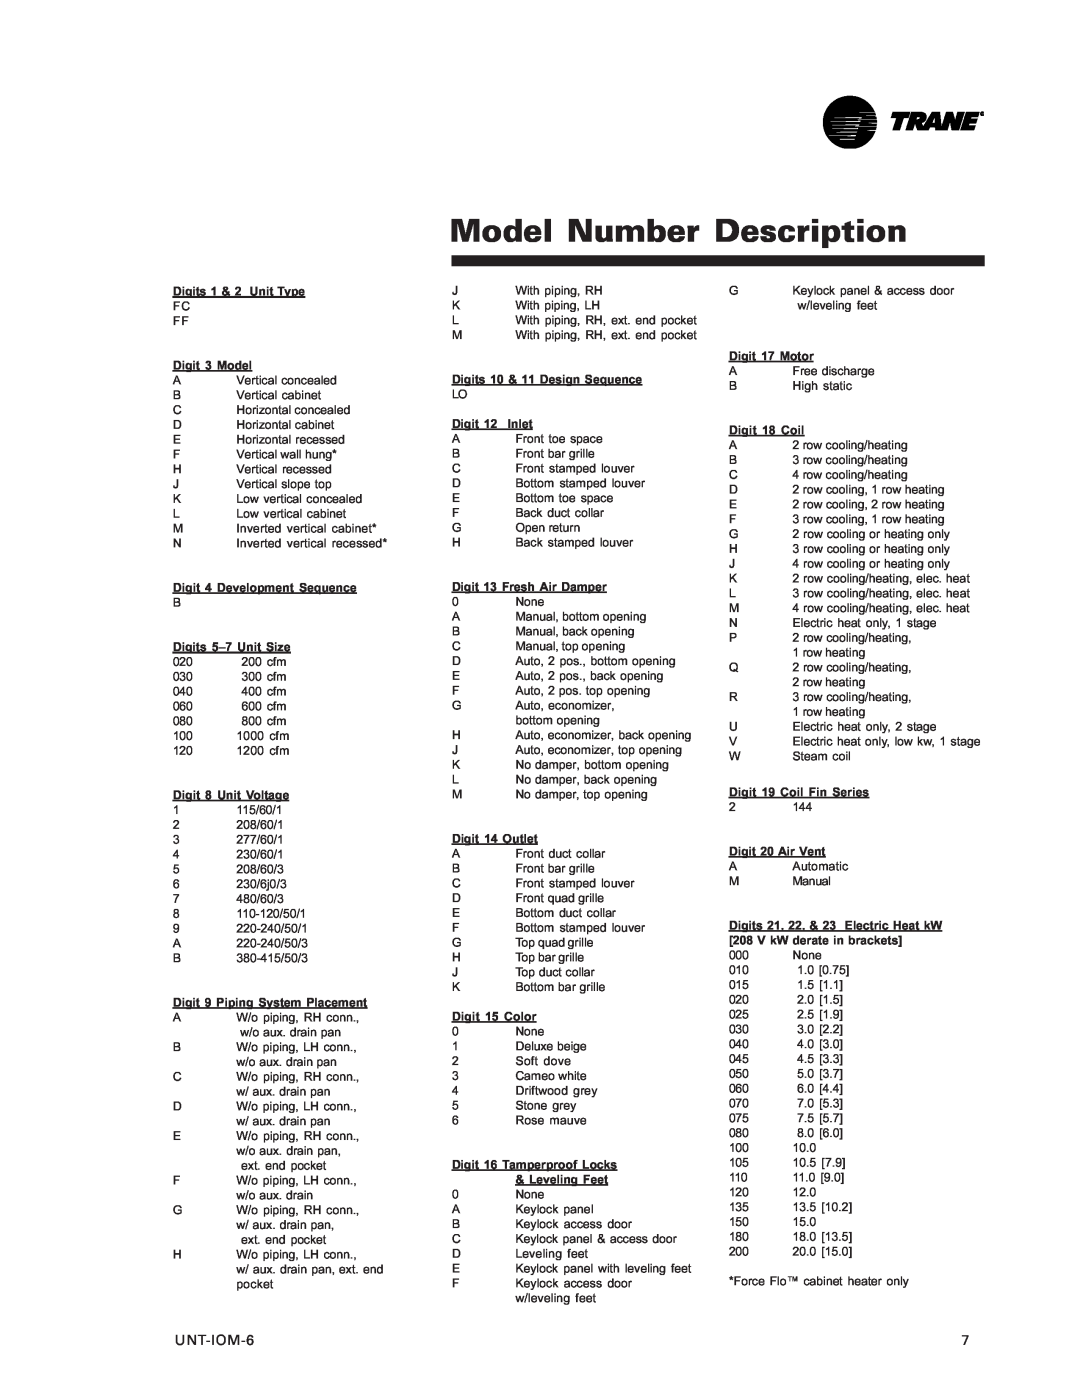 Trane LO manual Model Number Description, UNT-IOM-6 